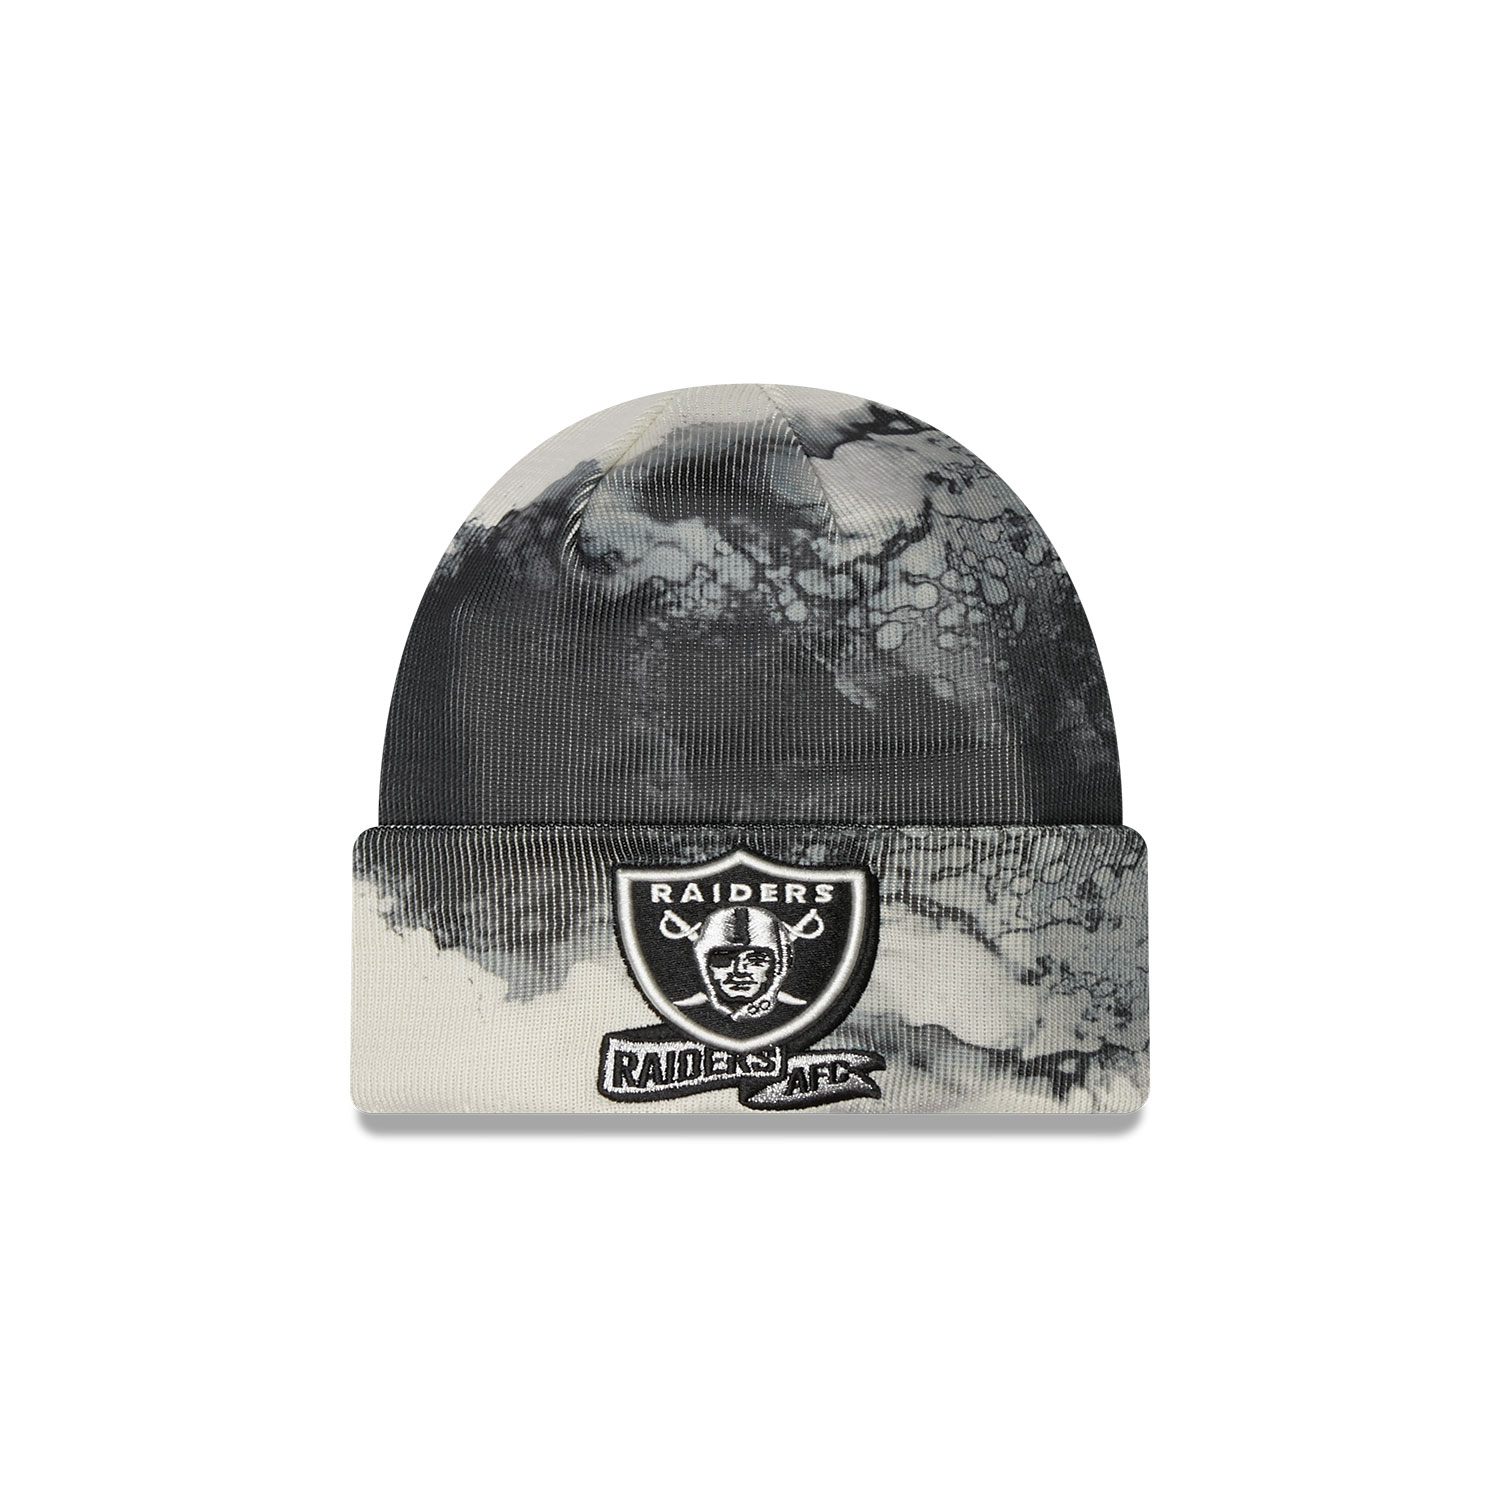 Las Vegas Raiders NFL Sideline Black Beanie Hat